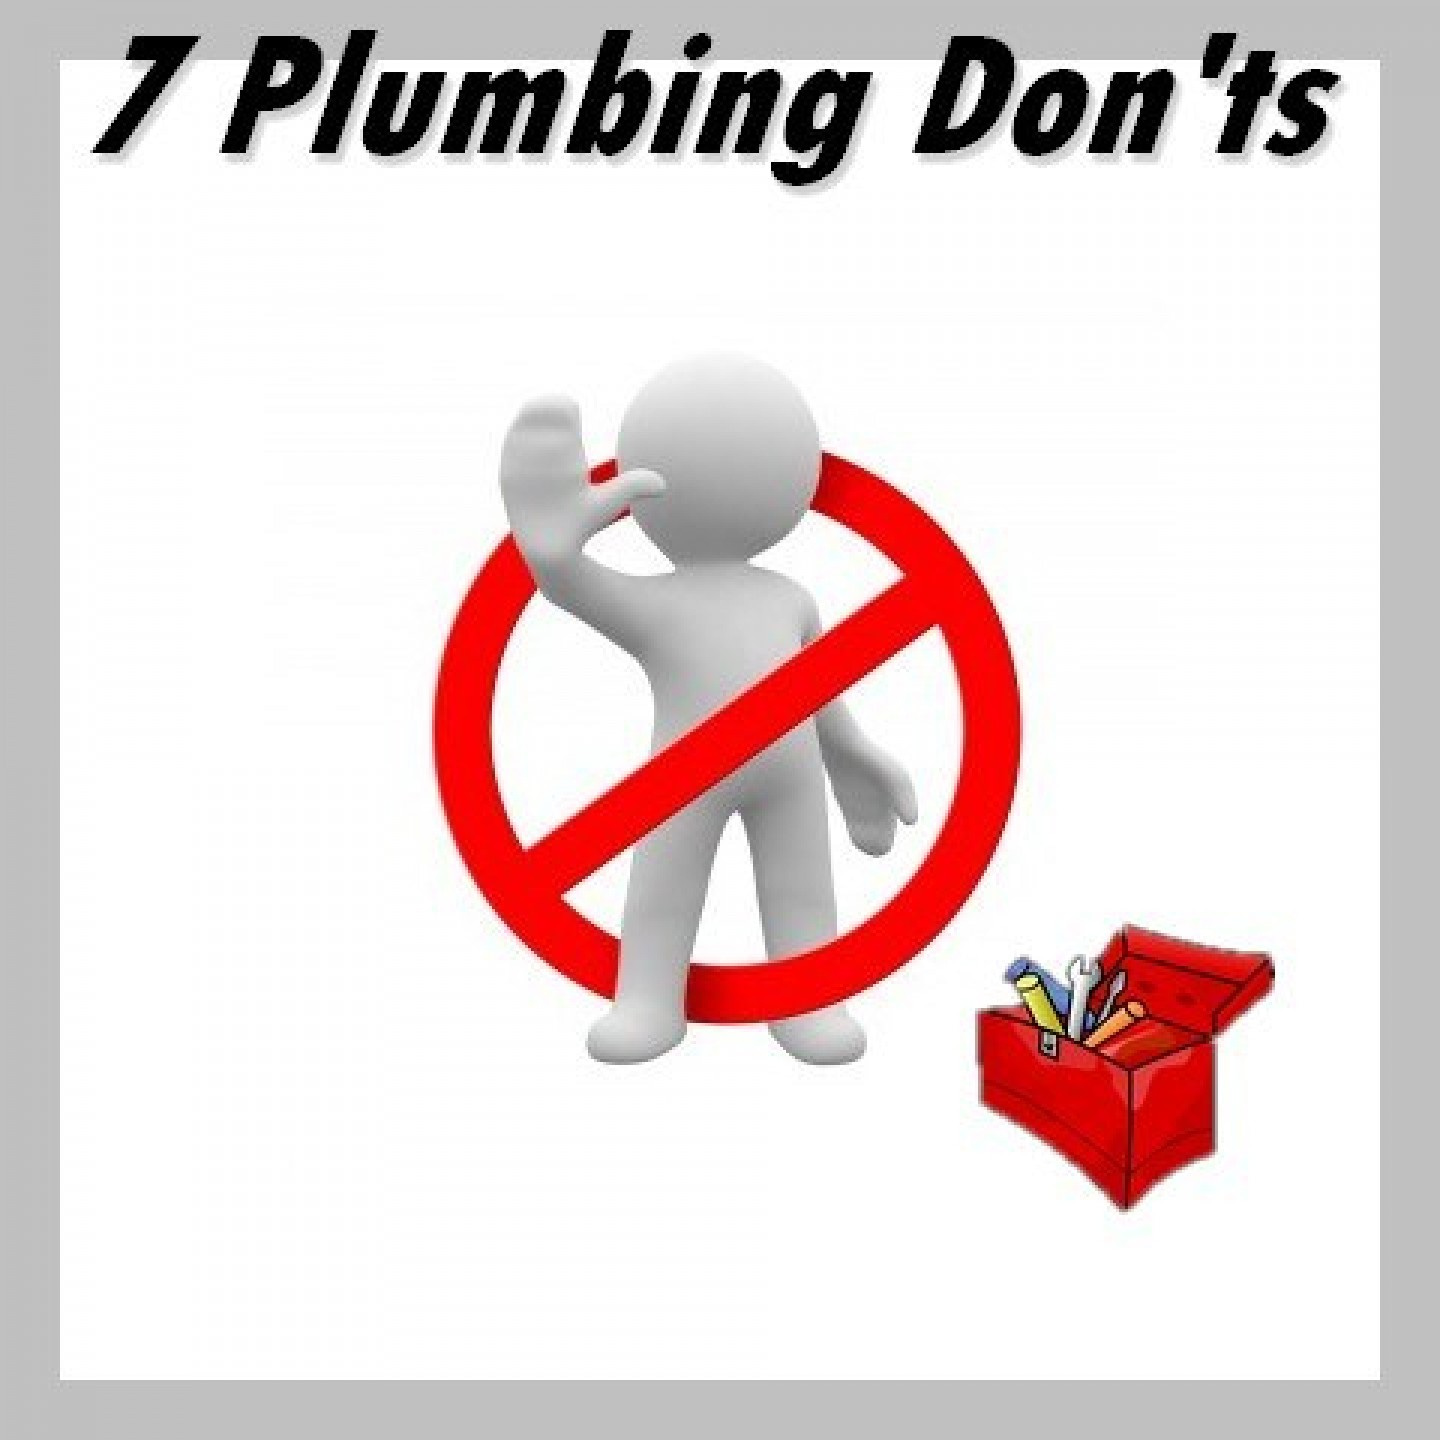 7-plumbing-donts